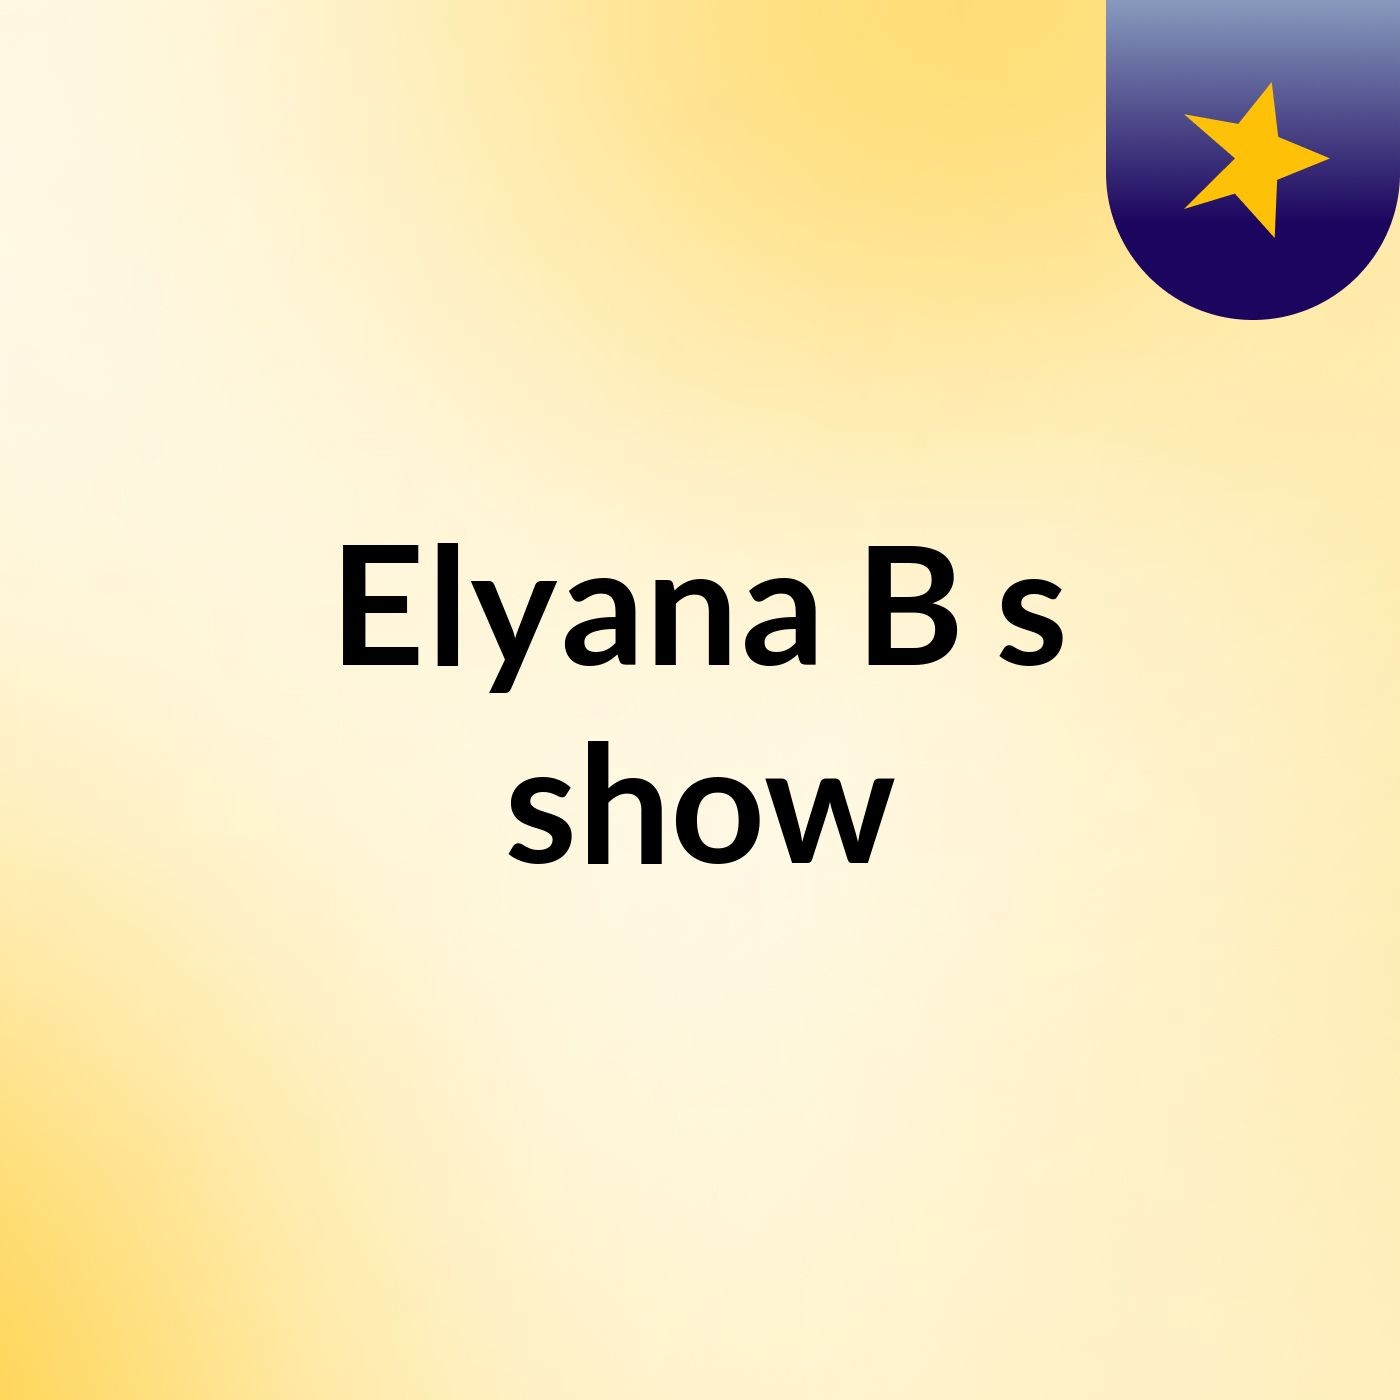 Elyana B's show